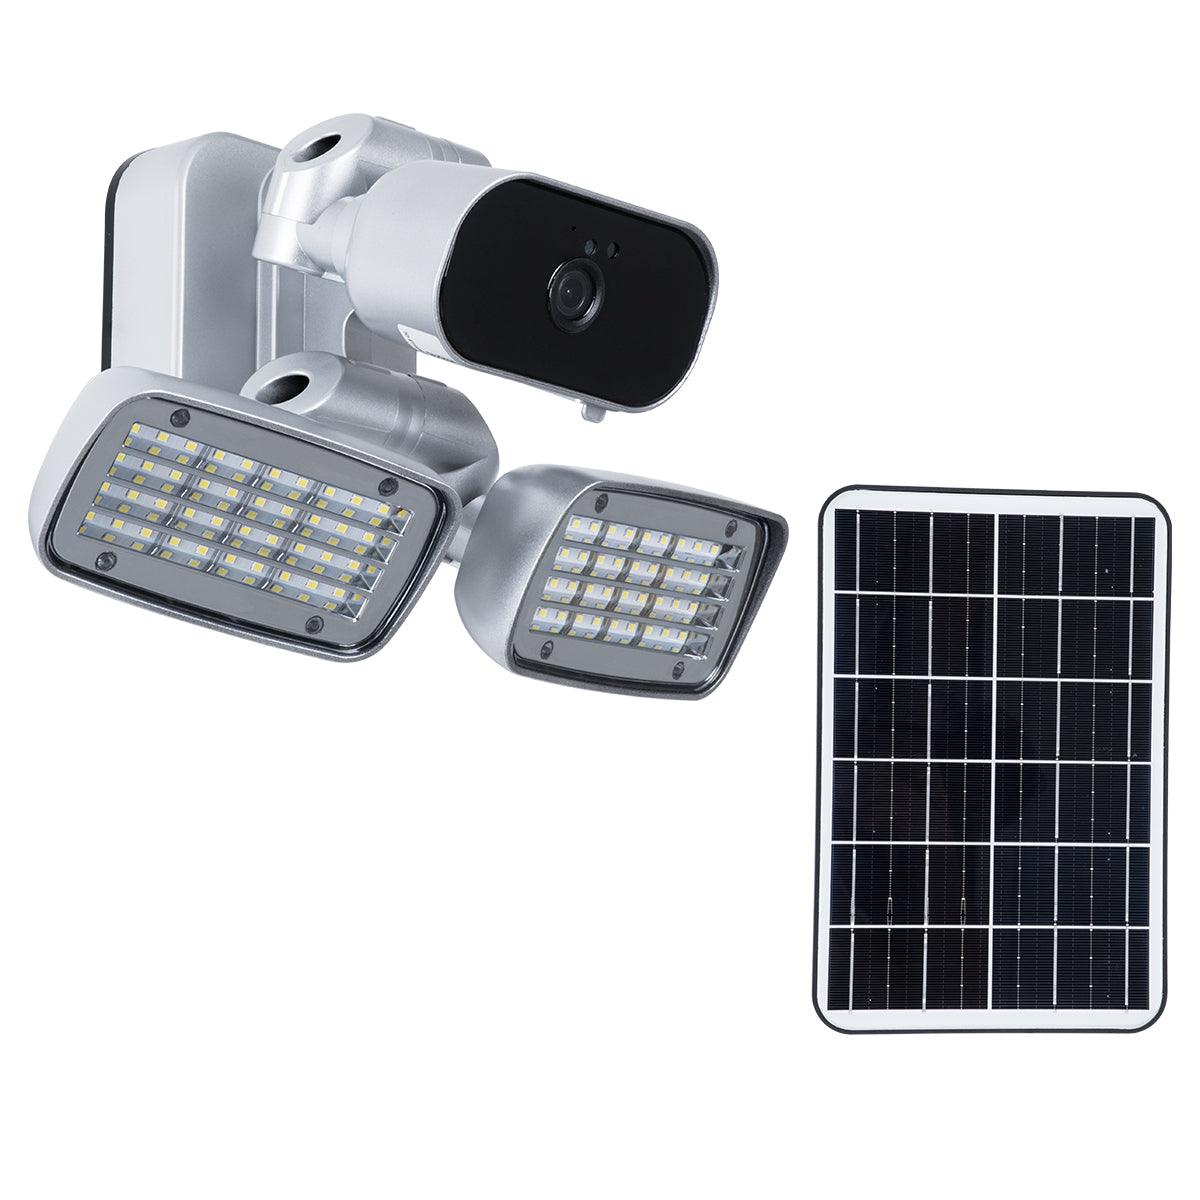 GloboStar® 86045 Αυτόνομος Ηλιακός Προβολέας LED SMD 24W 1200lm με IP Camera 1080P 2MP 4G SIM CARD WiFi 150° Ενσωματωμένη Μπαταρία 3200mAh Φωτοβολταϊκό Πάνελ Αισθητήρα Ημέρας-Νύχτας & Ρύθμιση Χρόνου Ανάμματος Αδιάβροχος IP66 Ψυχρό Λευκό 6000K - Ασημί - ledmania.gr